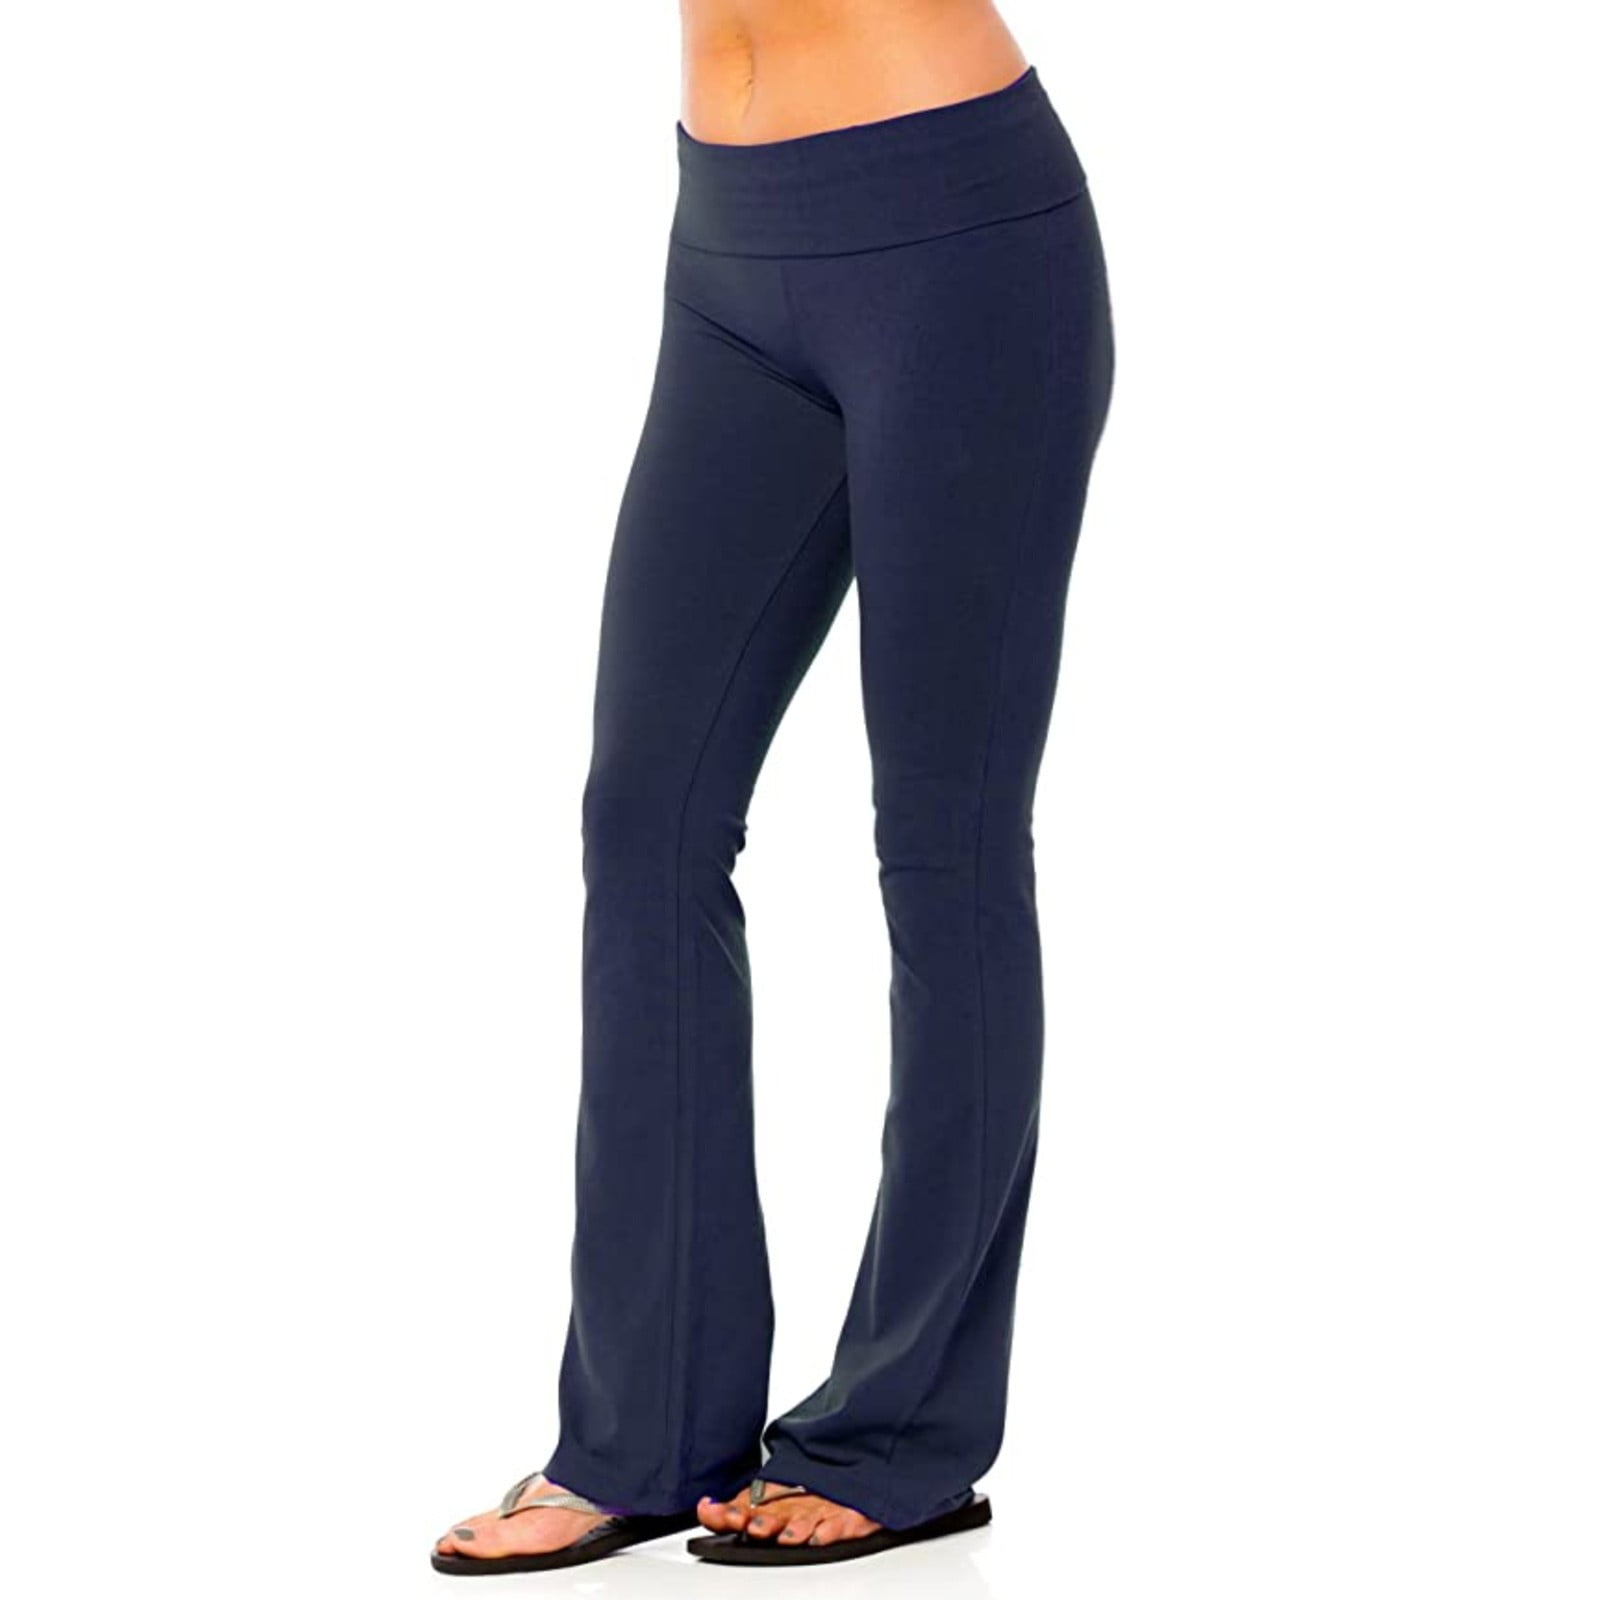 njshnmn Women Bootcut Yoga Pants with Pockets Women High Waist Full Ankle  Length Leggings, Navy, XXXL 